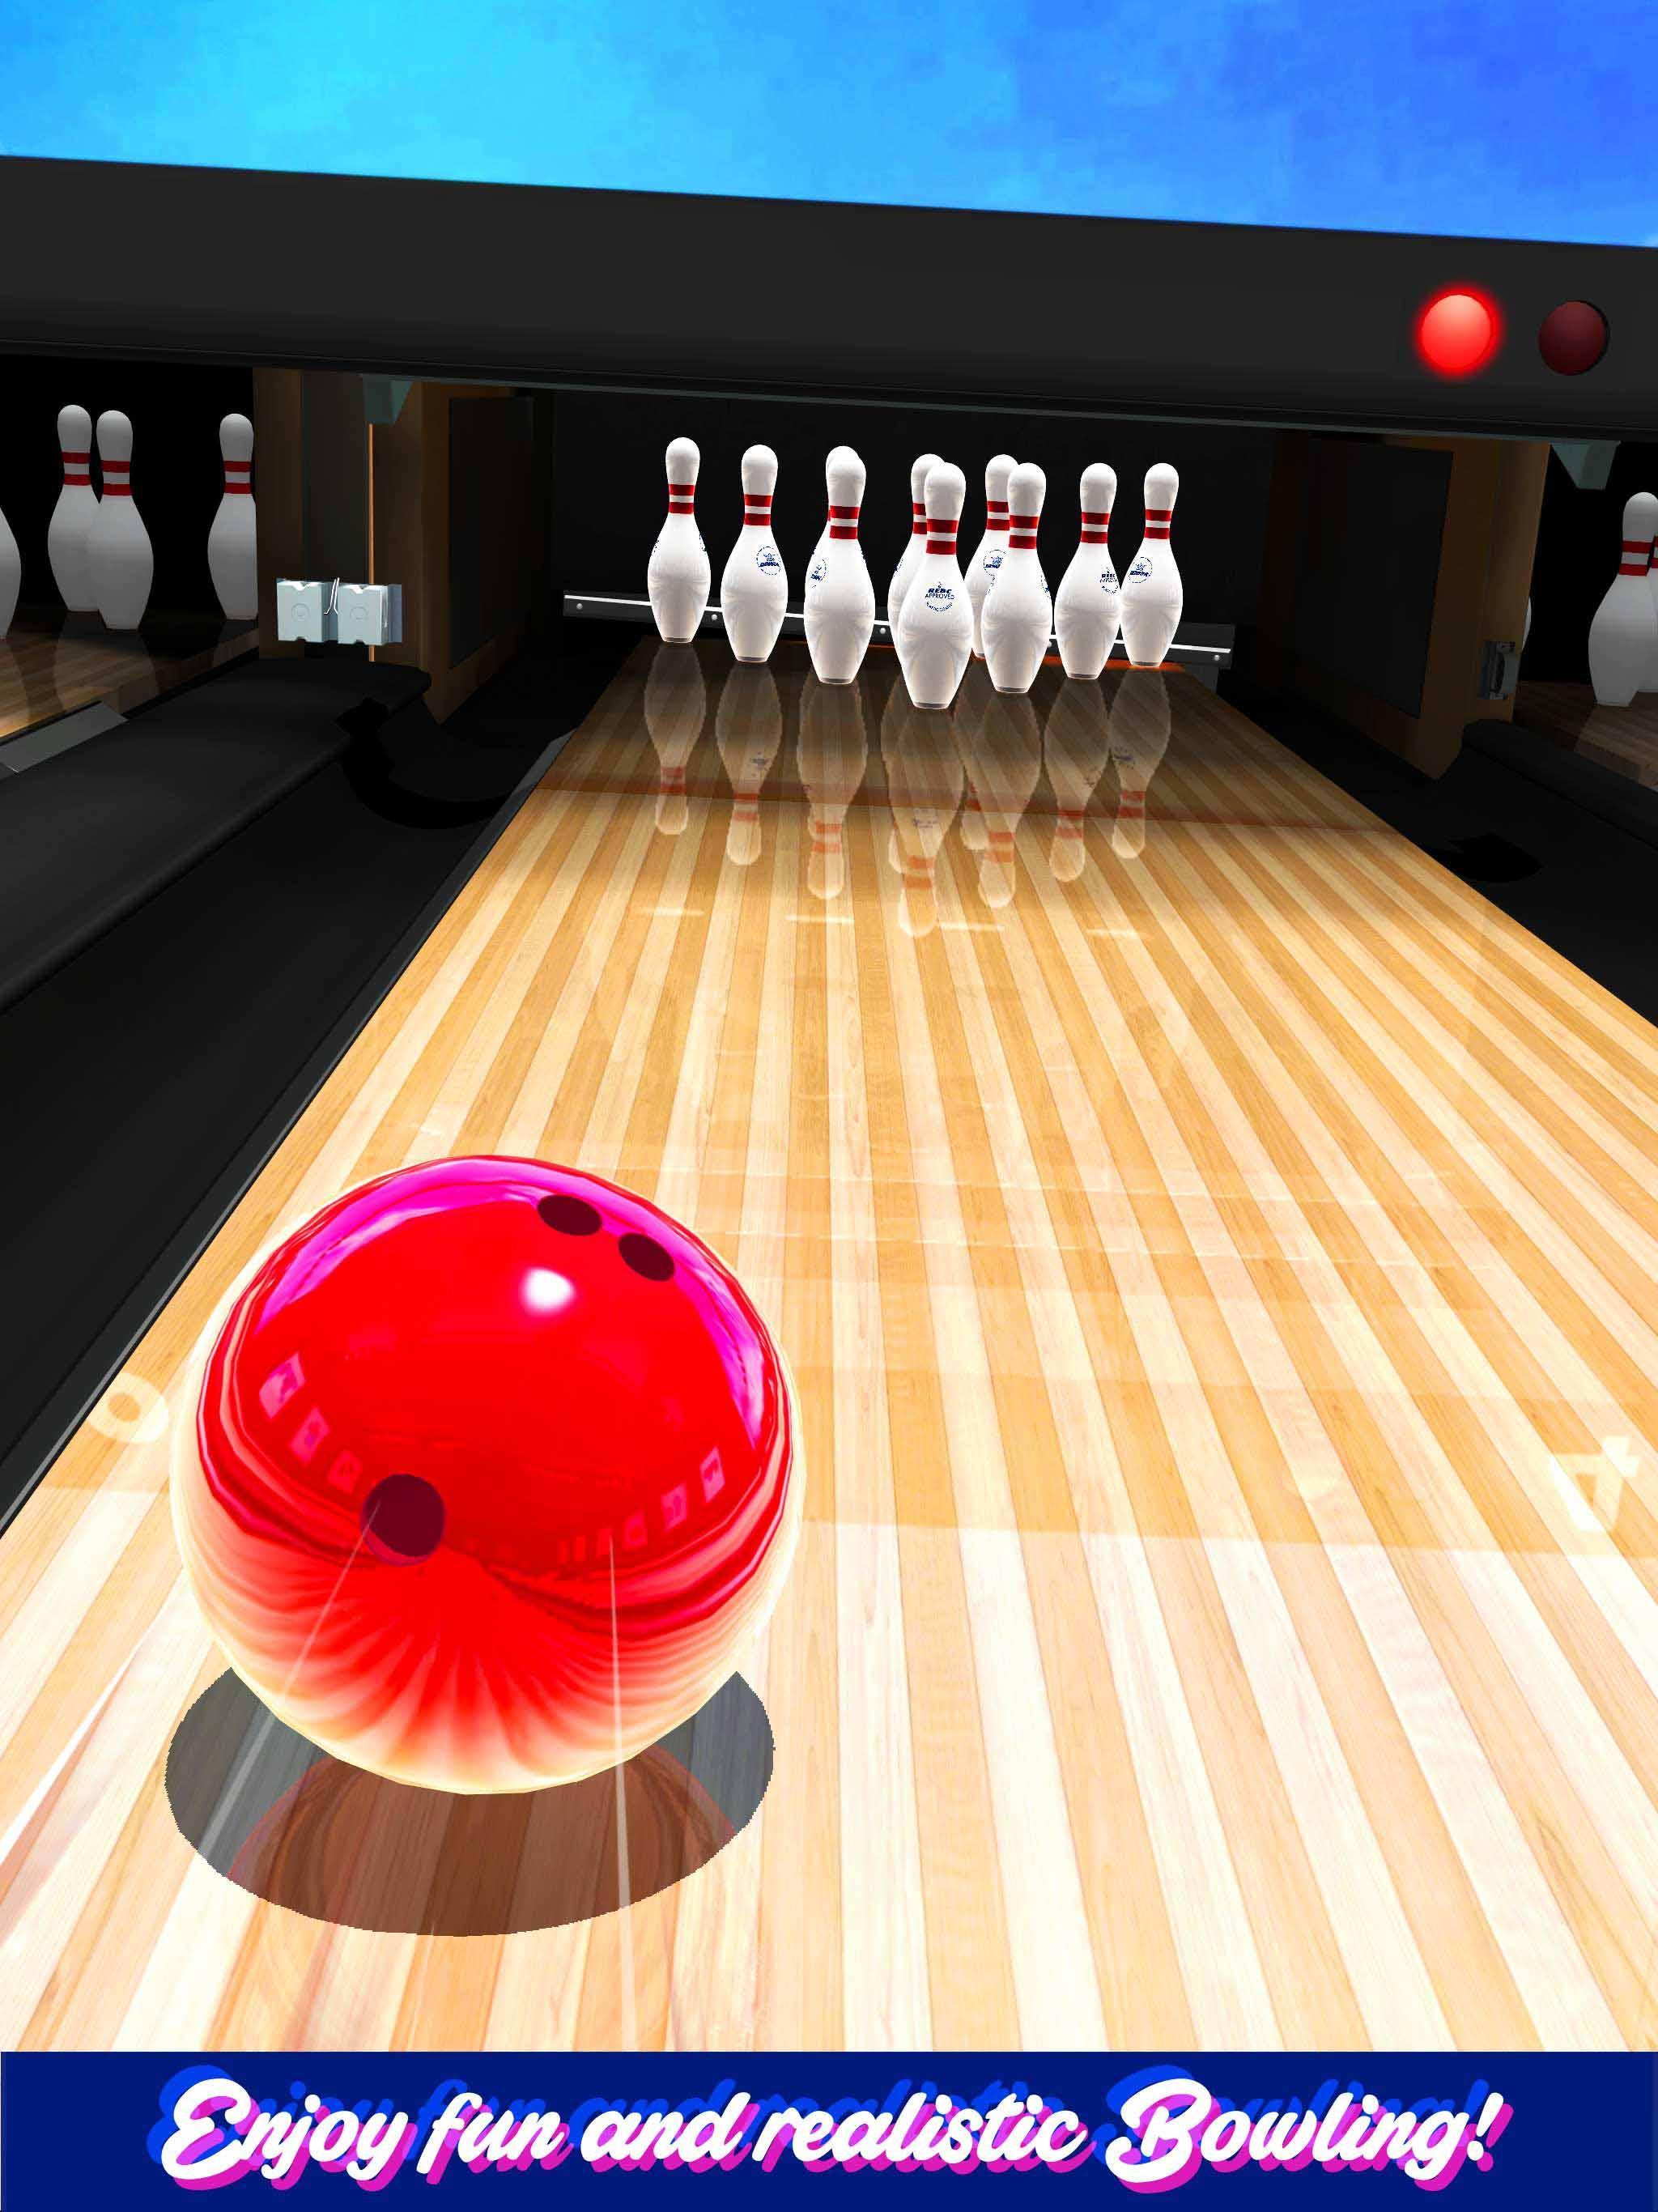 Bowling Go! - Best Realistic 10 Pin Bowling Games 0.3.0.1512 Screenshot 11